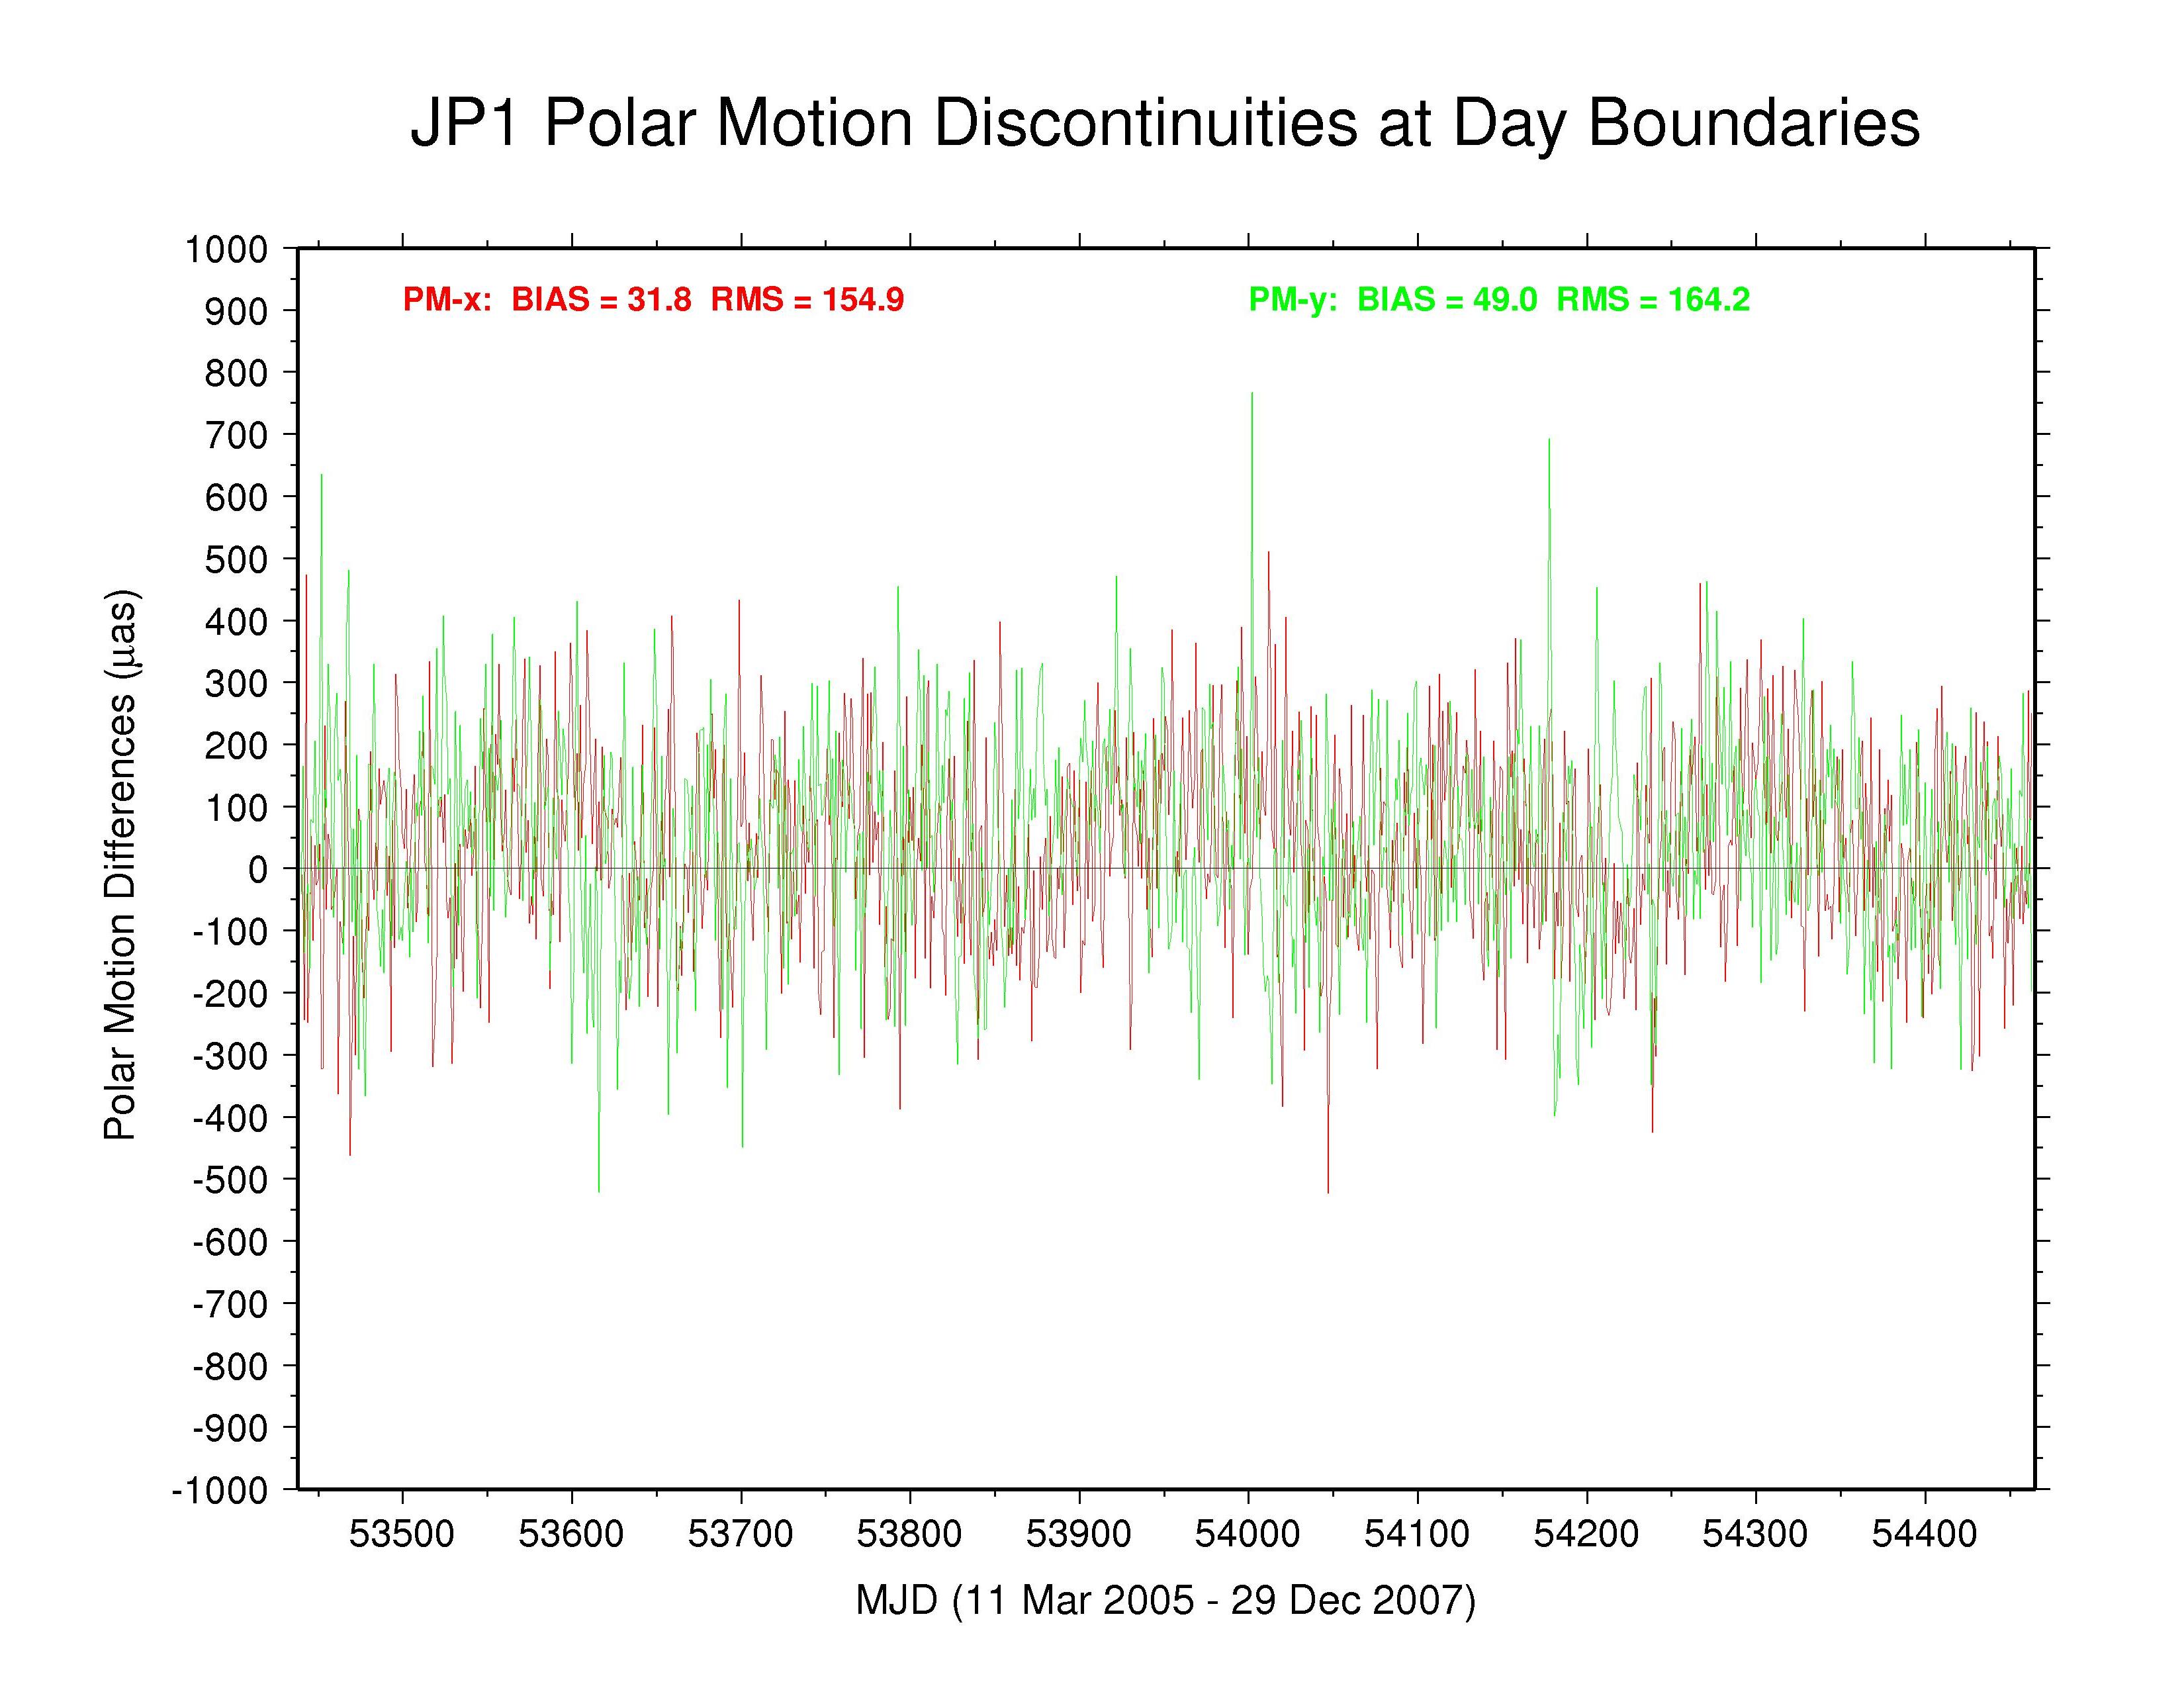 JPL polar motion discontinuities